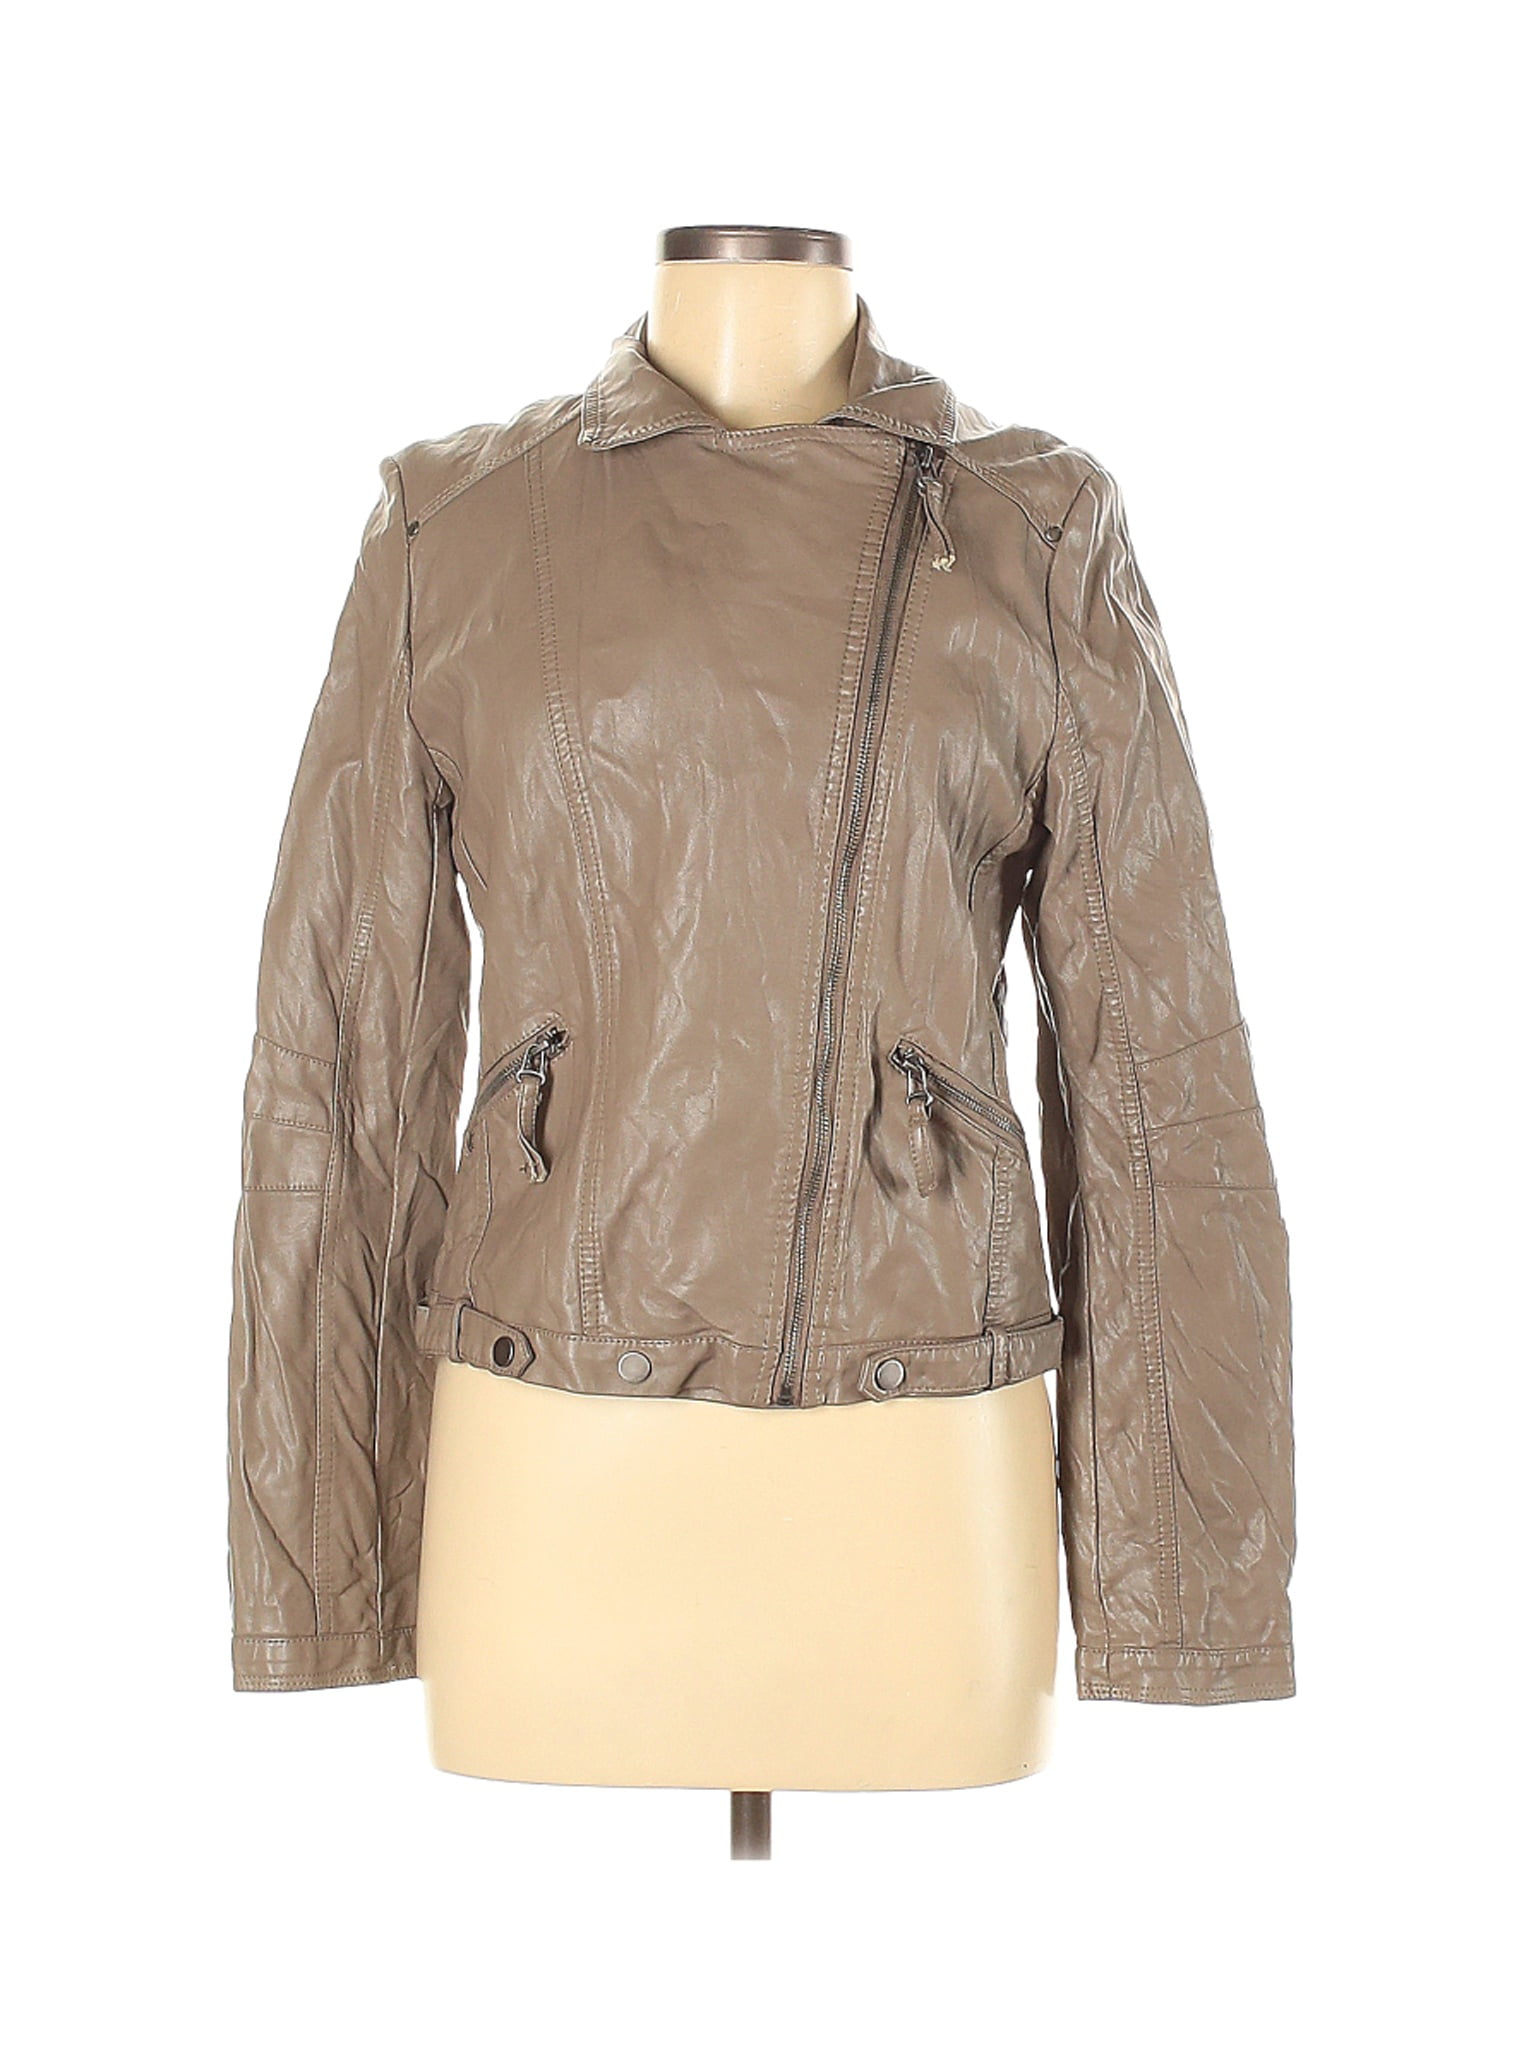 Bagatelle - Pre-Owned Bagatelle Women's Size 8 Faux Leather Jacket ...